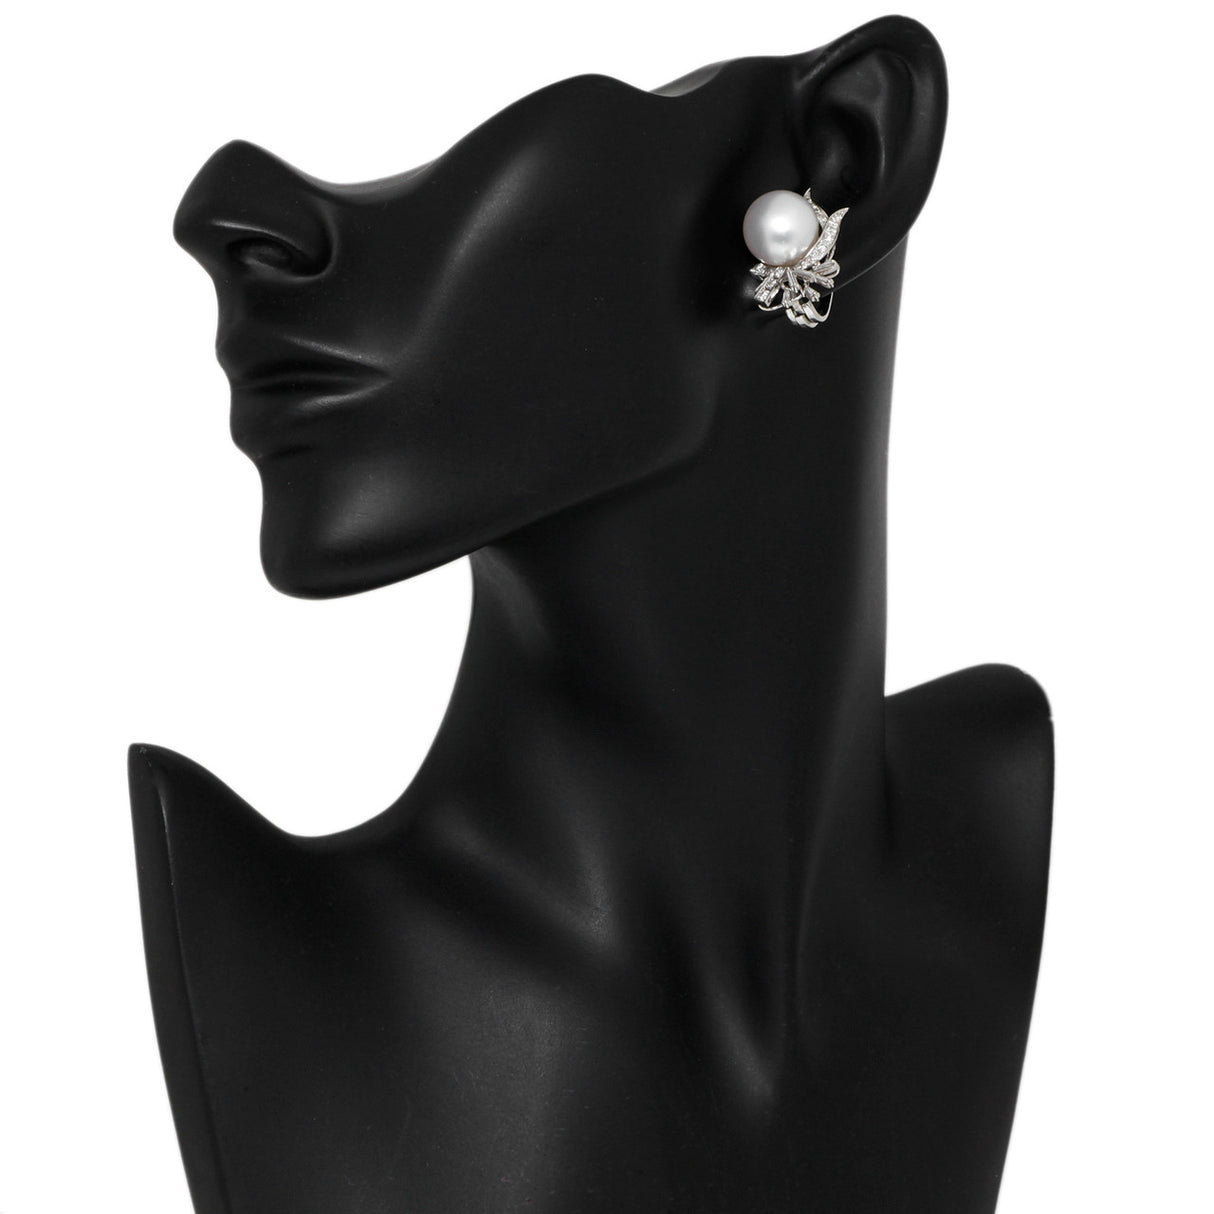 14K White Gold South Sea Pearl Diamond Earrings